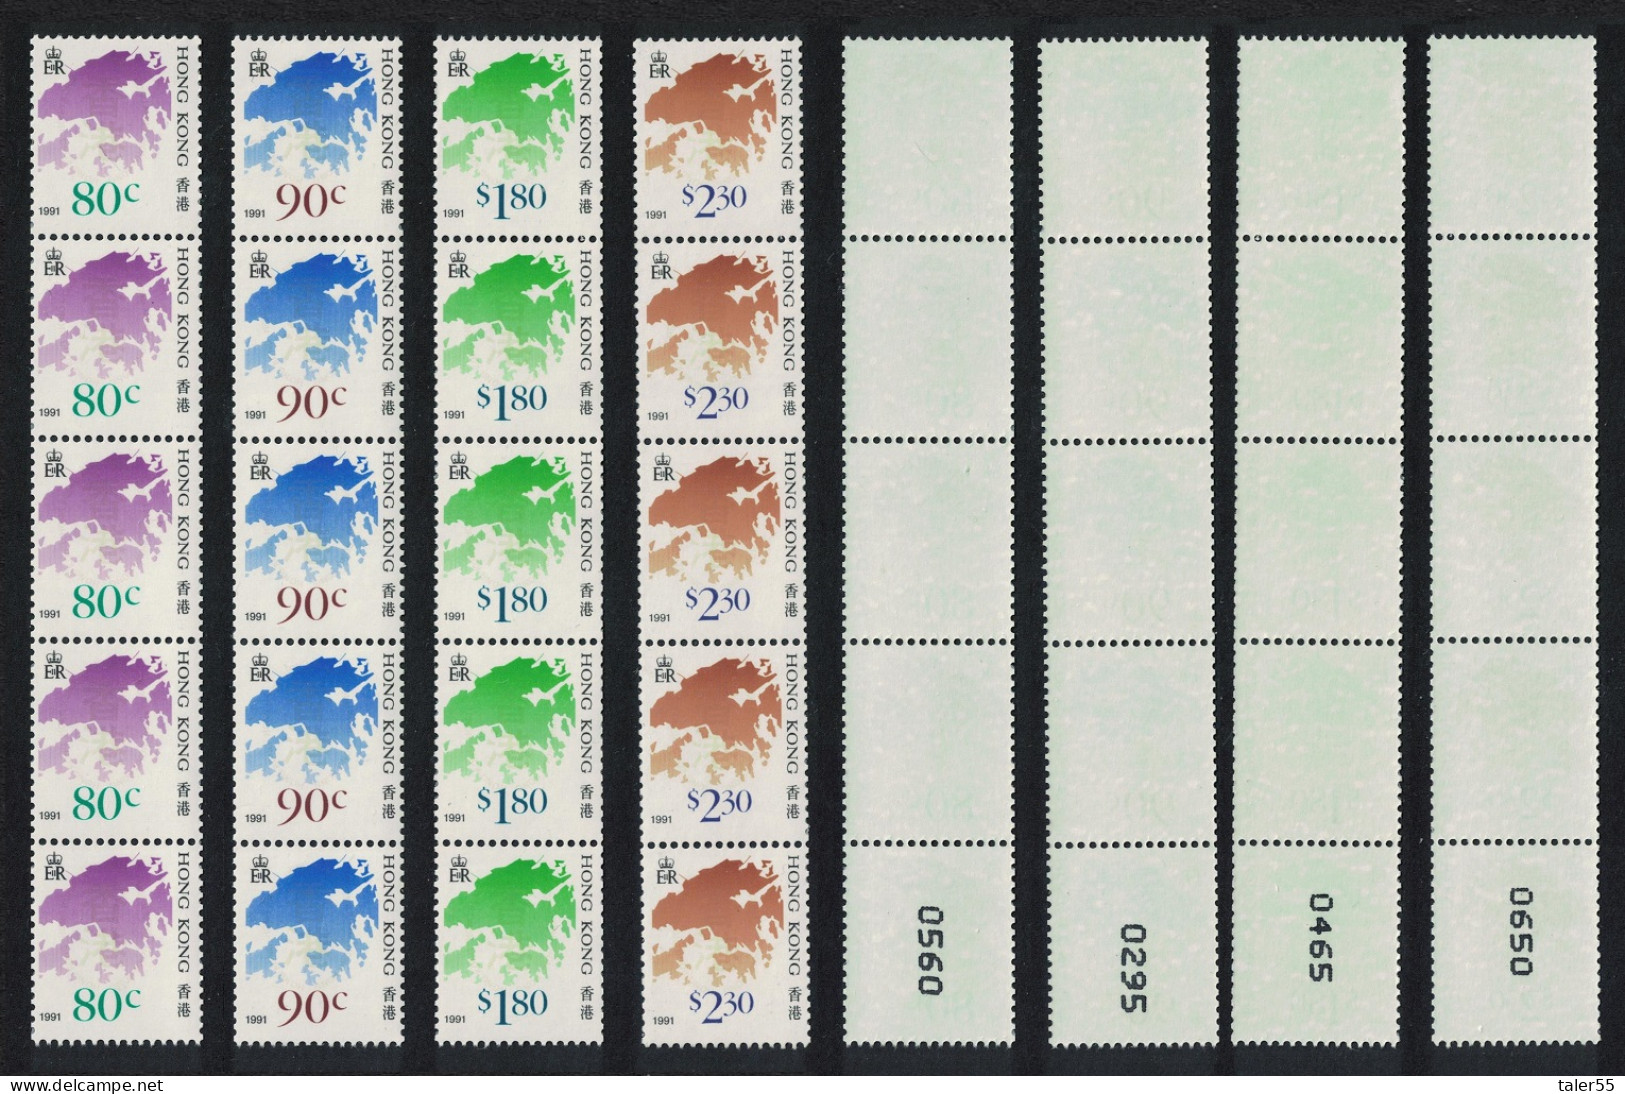 Hong Kong Coil Stamps Full Set 4v Strips Of 5 Control Number 1992 MNH SG#554c-554f MI#641-644 - Unused Stamps